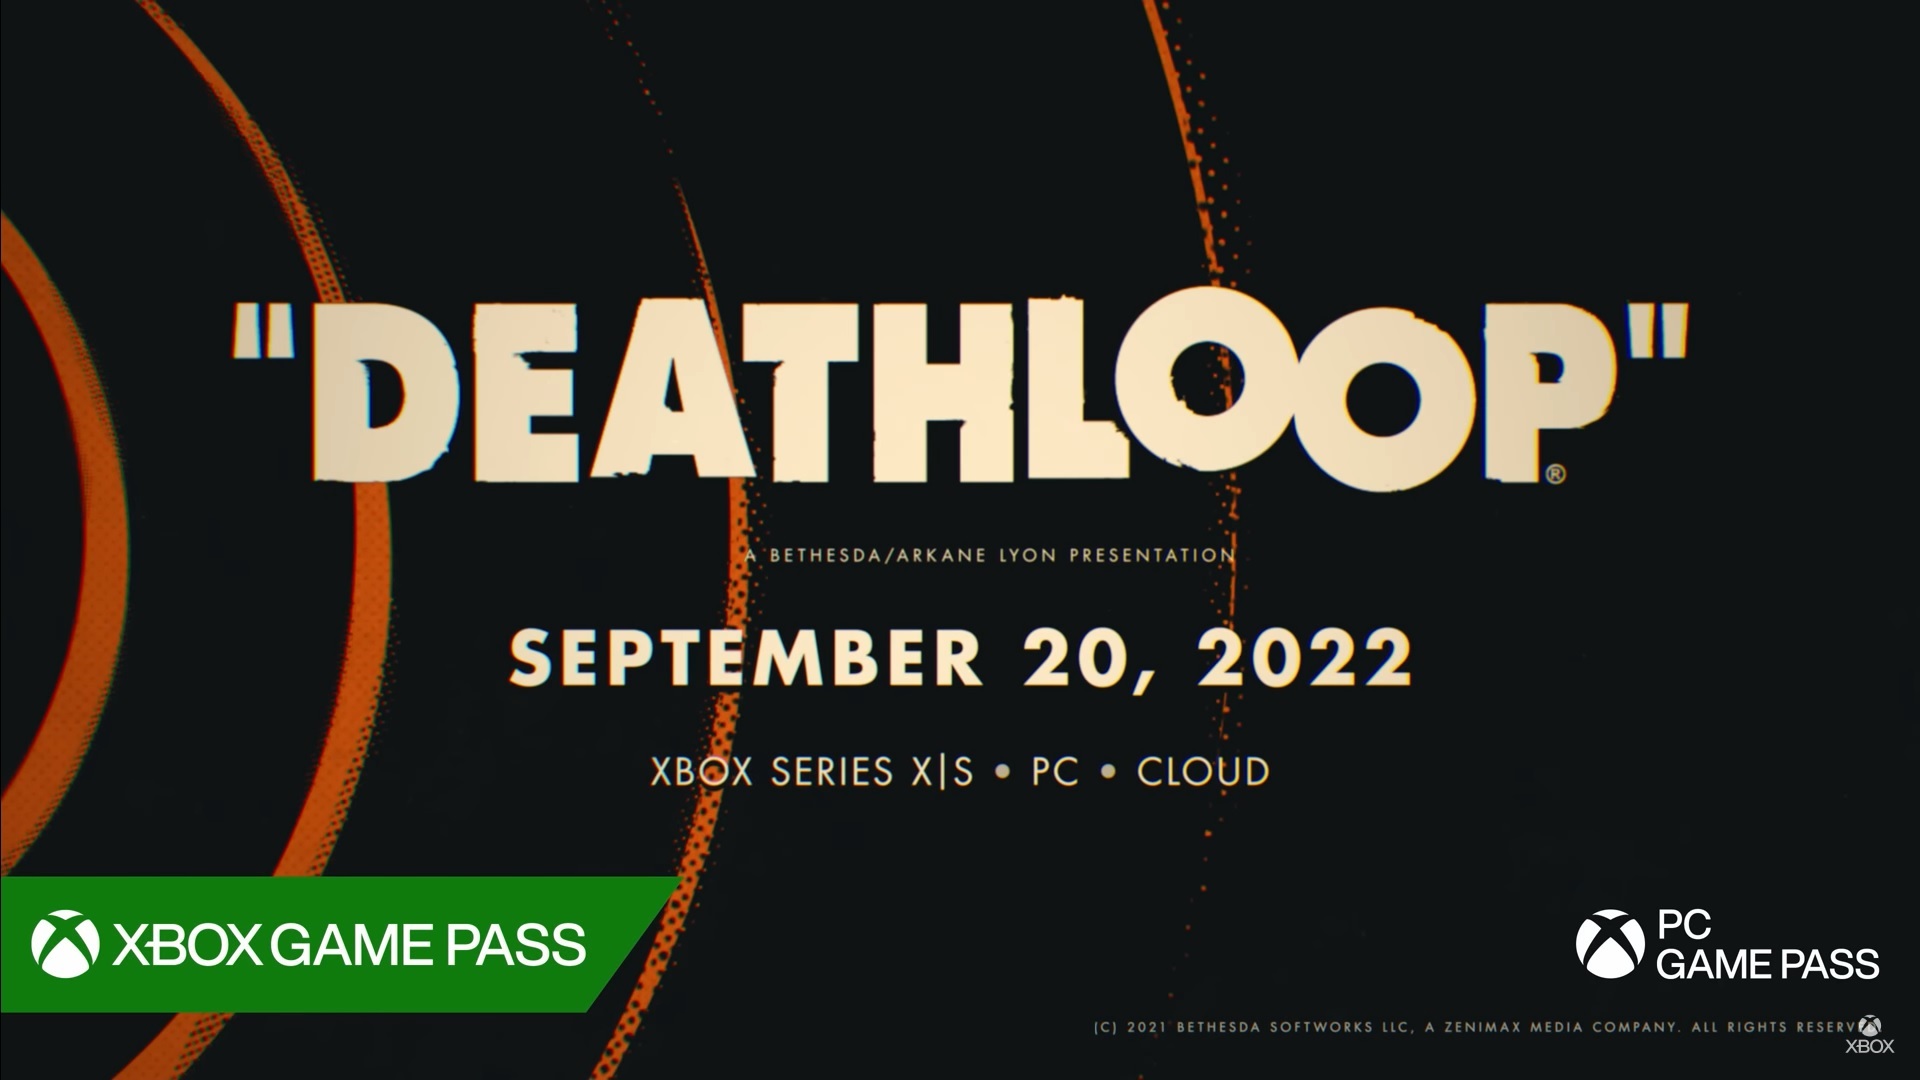 Deathloop coming to Xbox